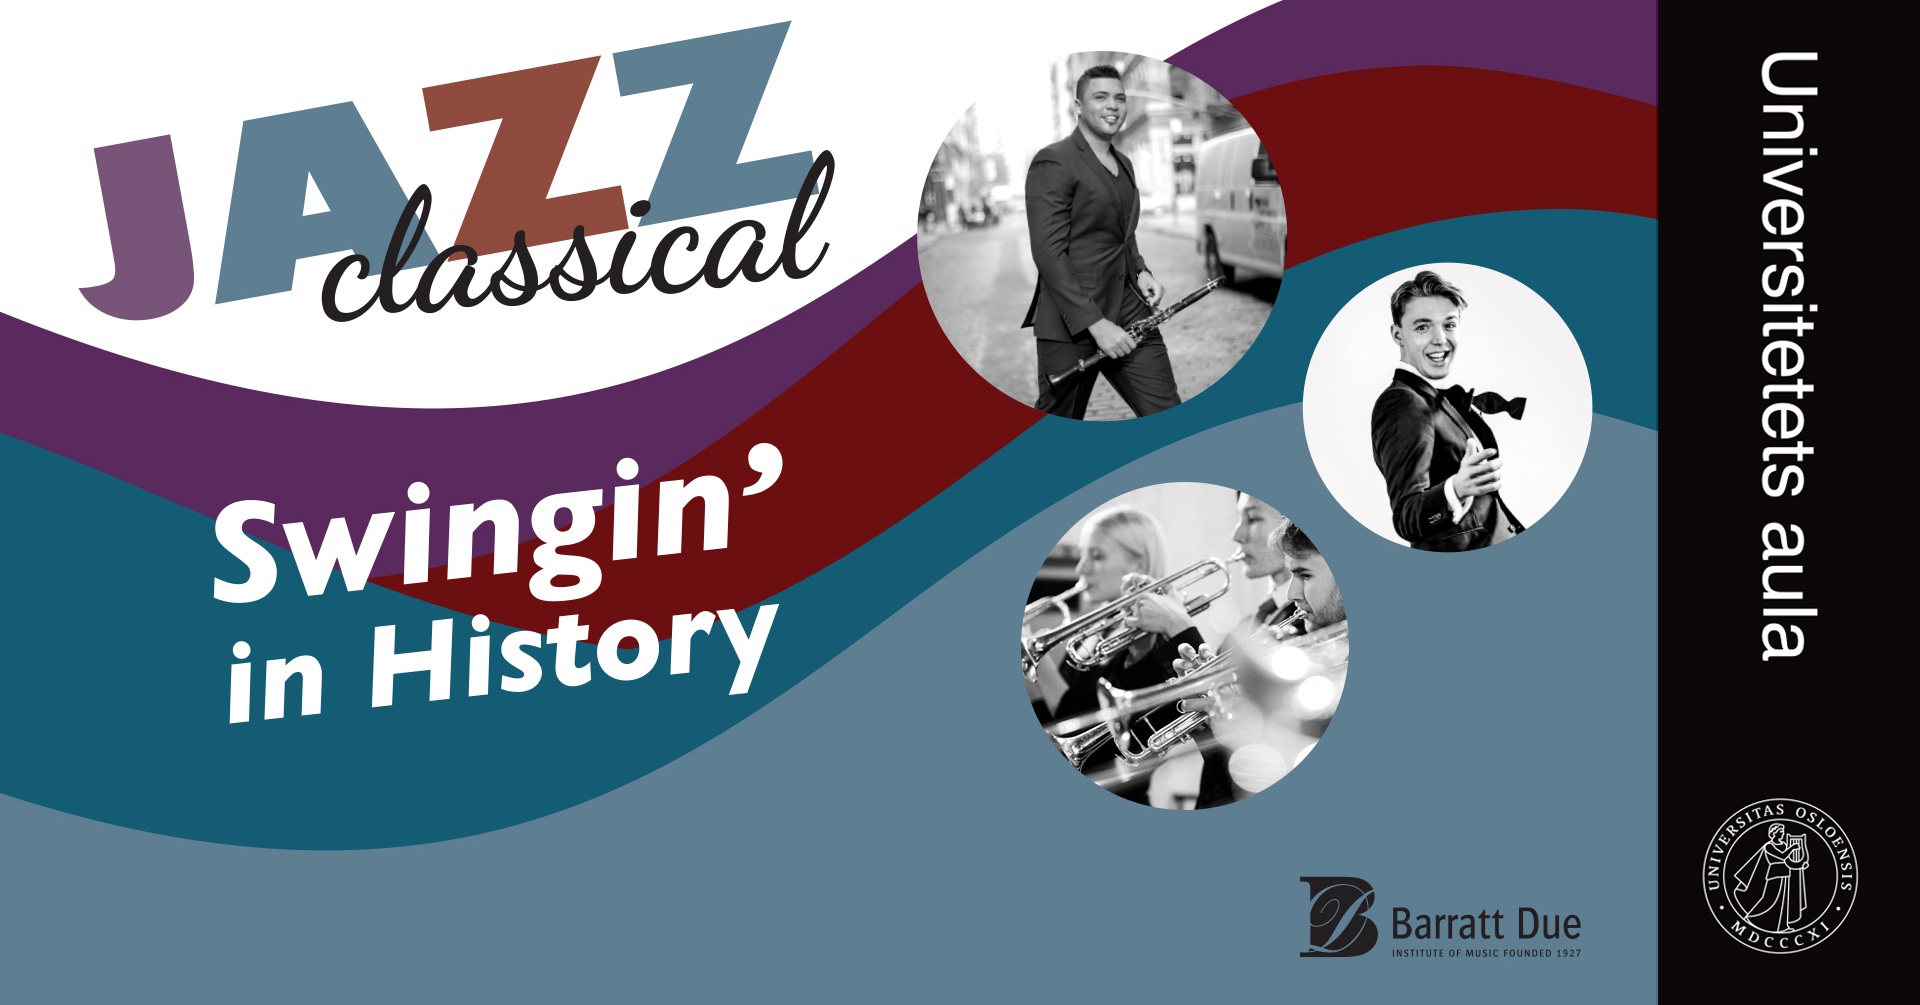 Jazz classical Swingin' in History